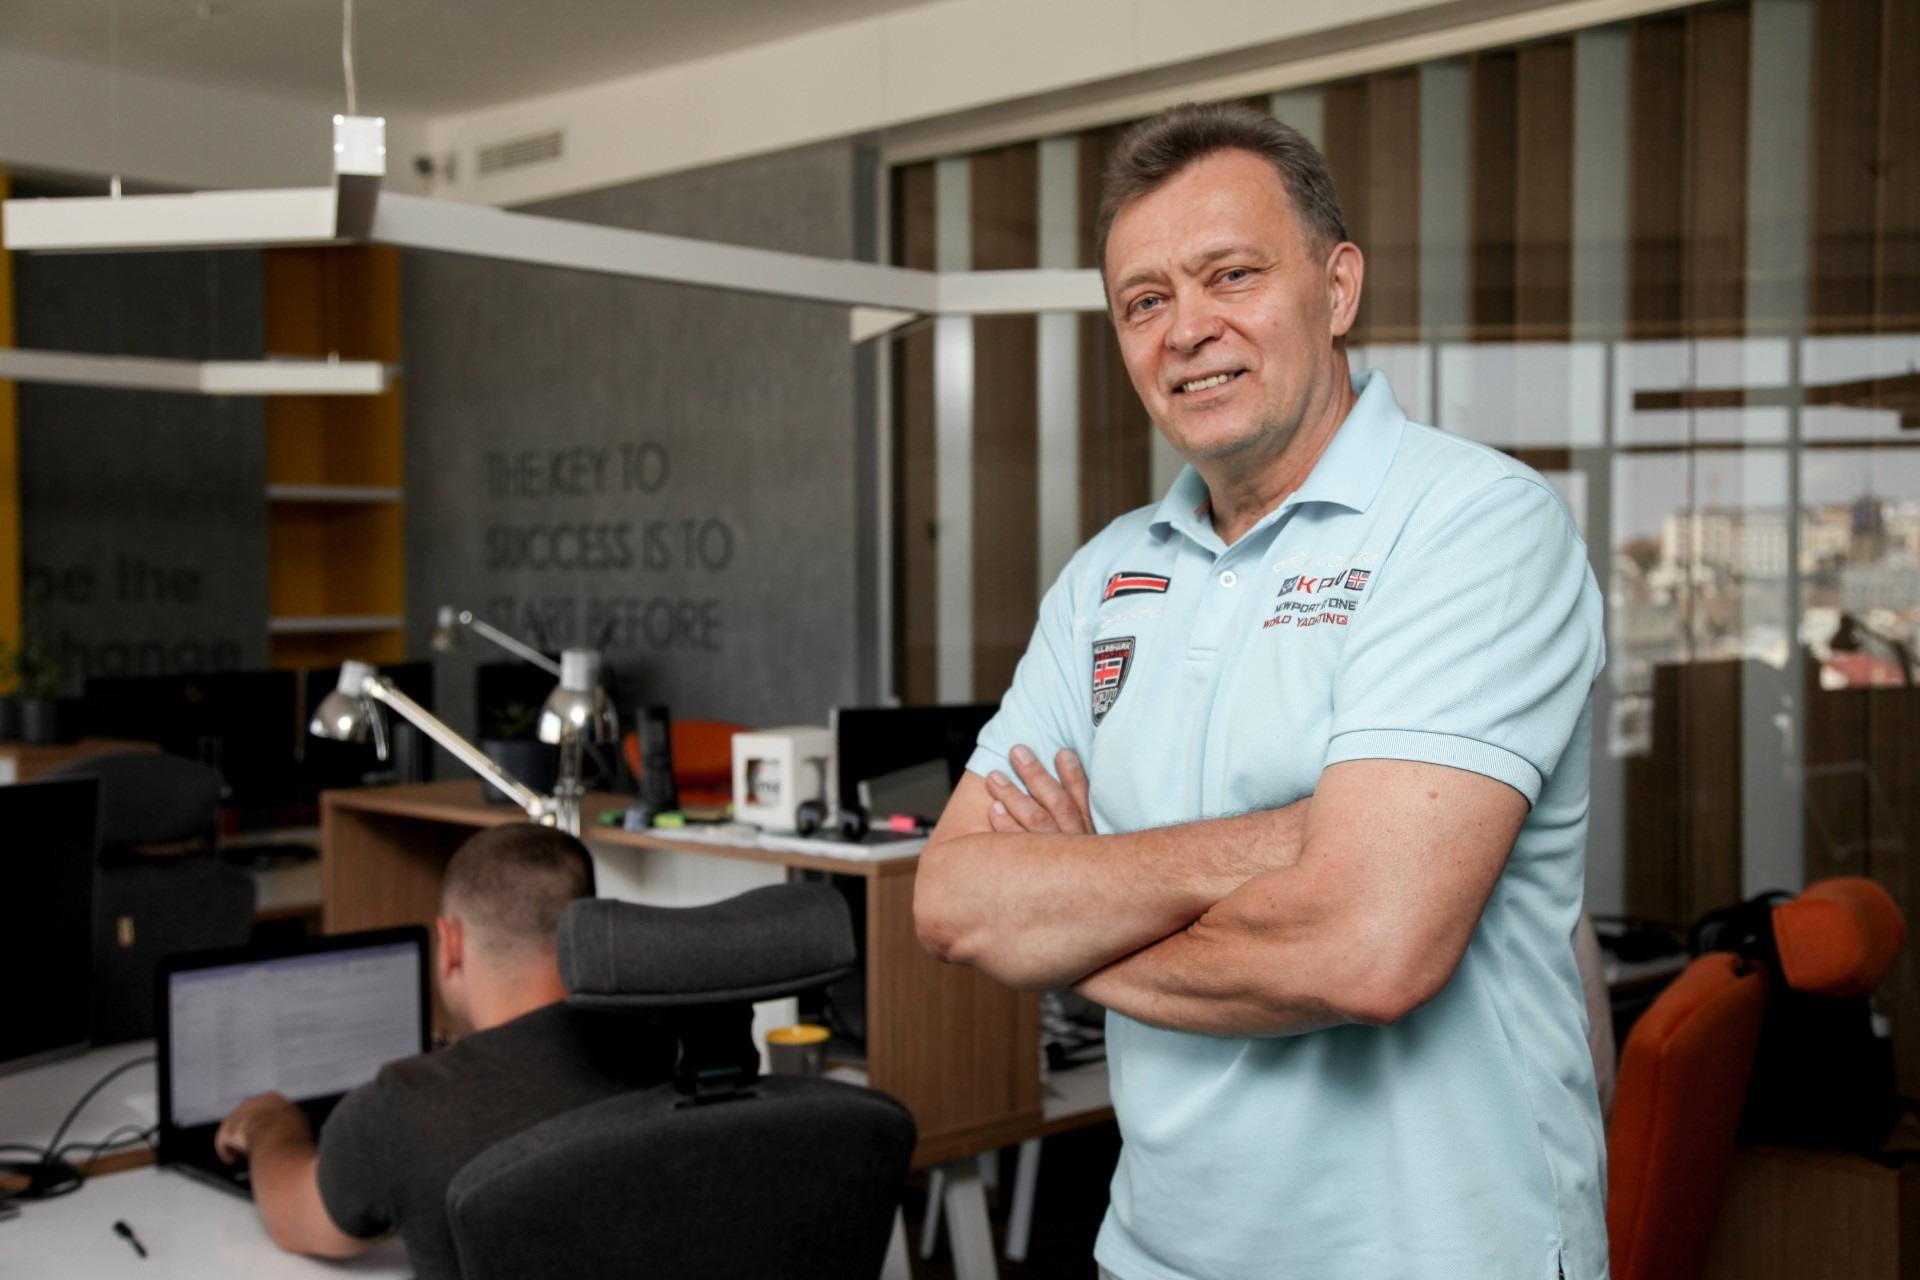 Eduard Trotsenko, co-owner and CEO of INFOCOM LTD